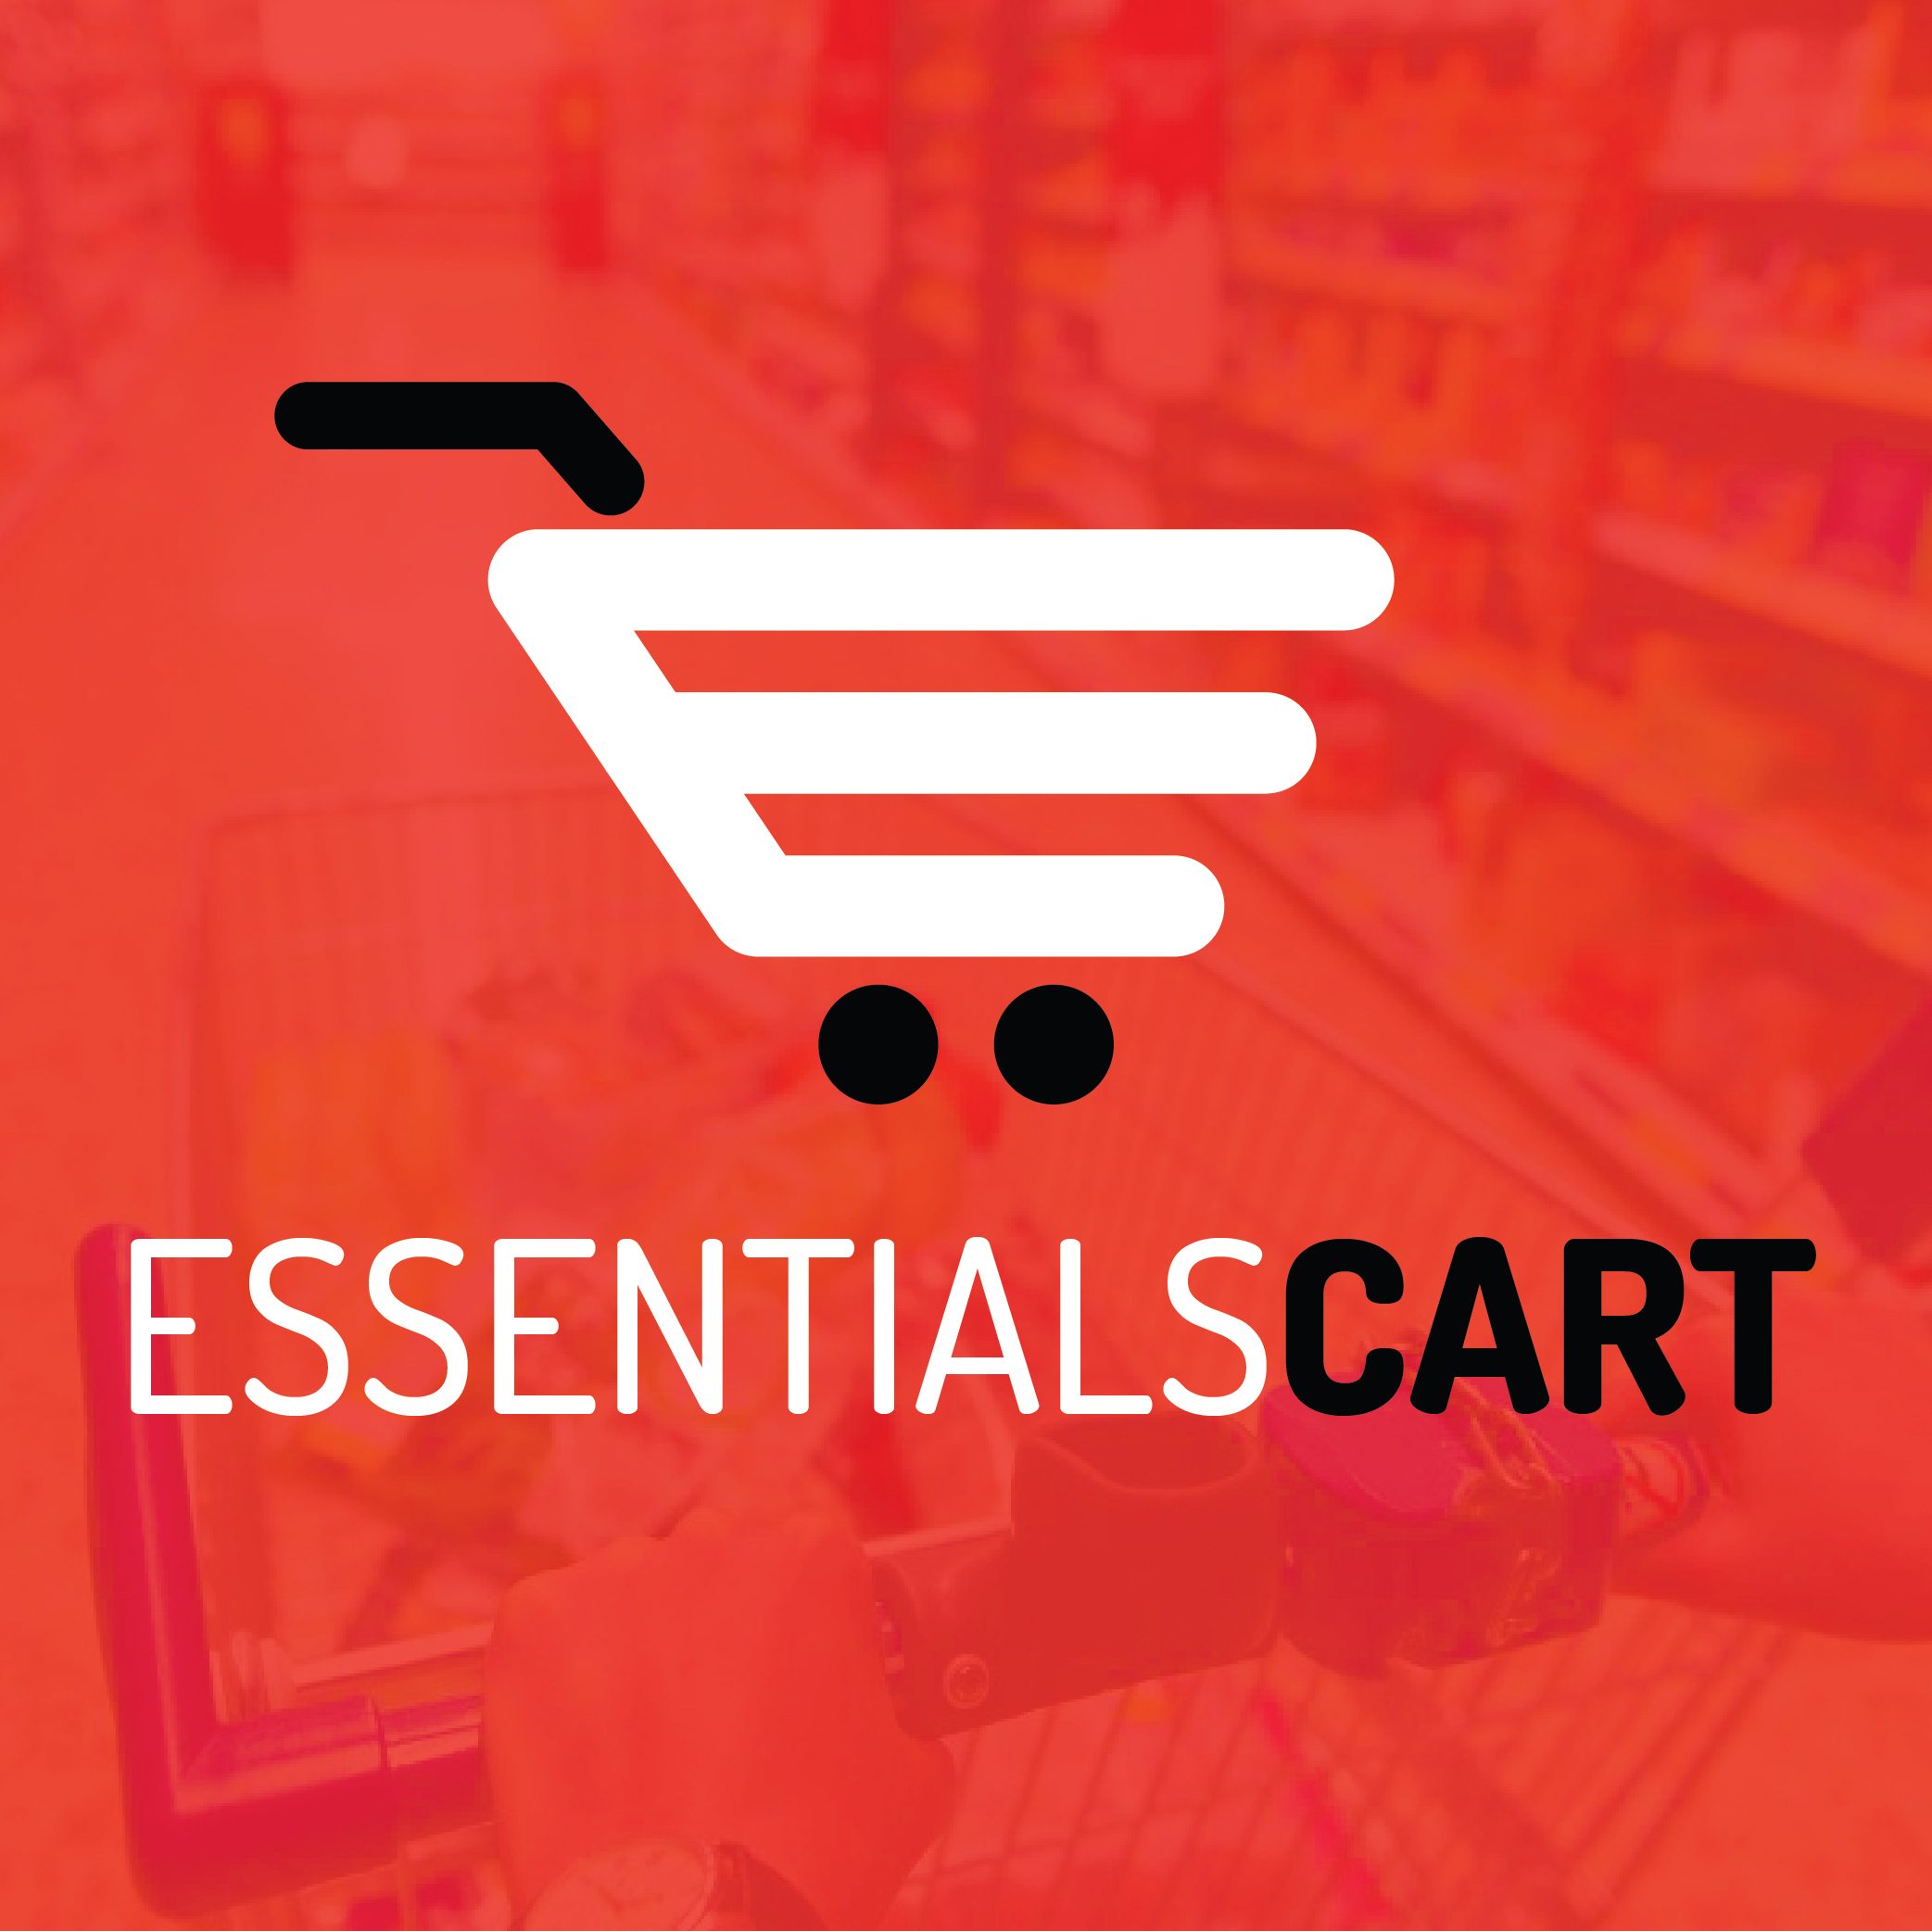 Essentials Cart